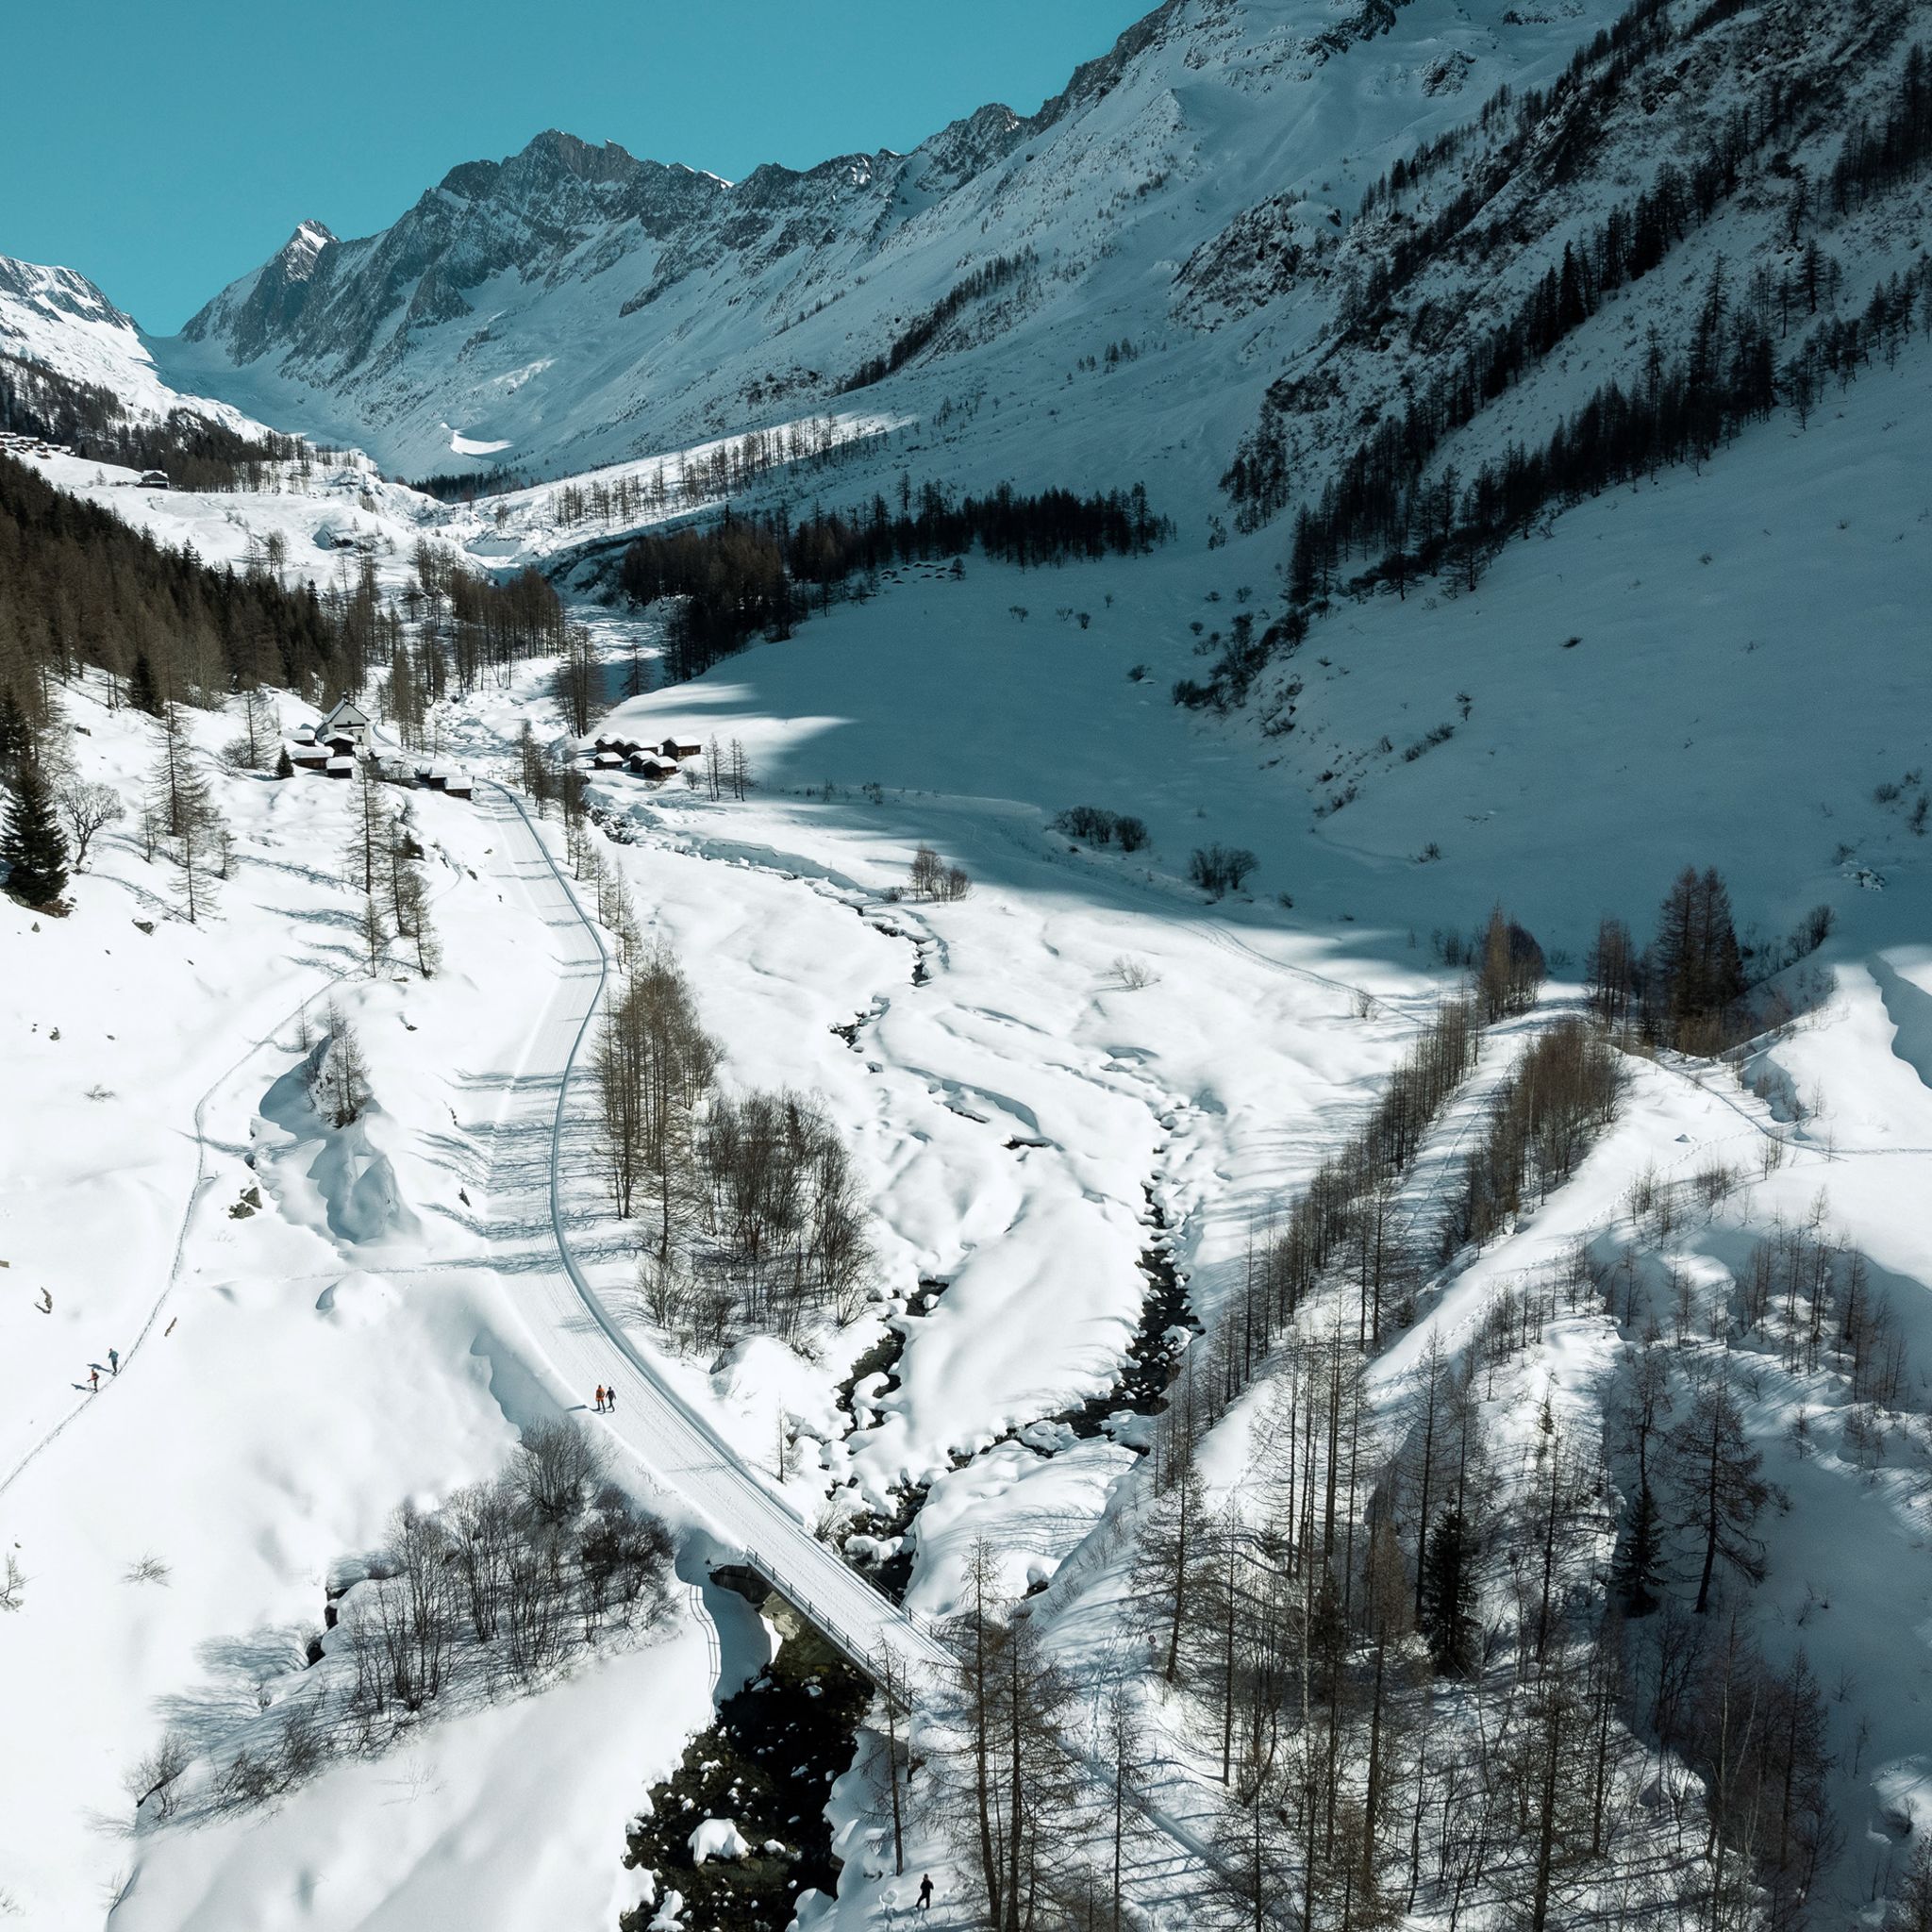 Winter hiking trail to the Fafleralp. 
Valais, Swizerland